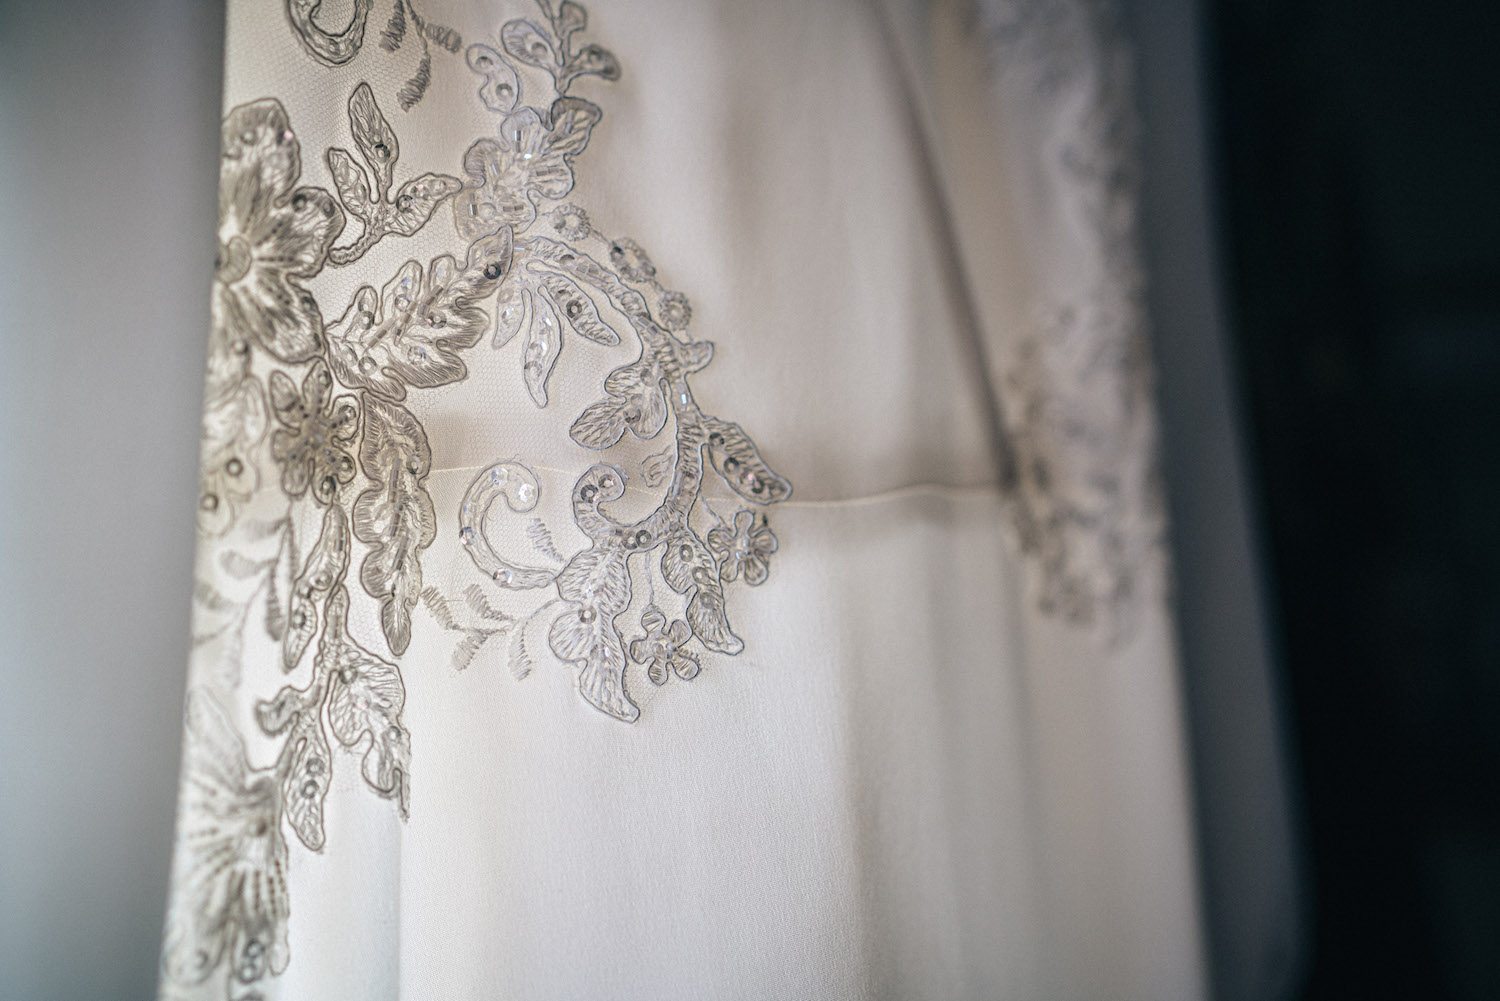 Lace and embellished details on wedding dress